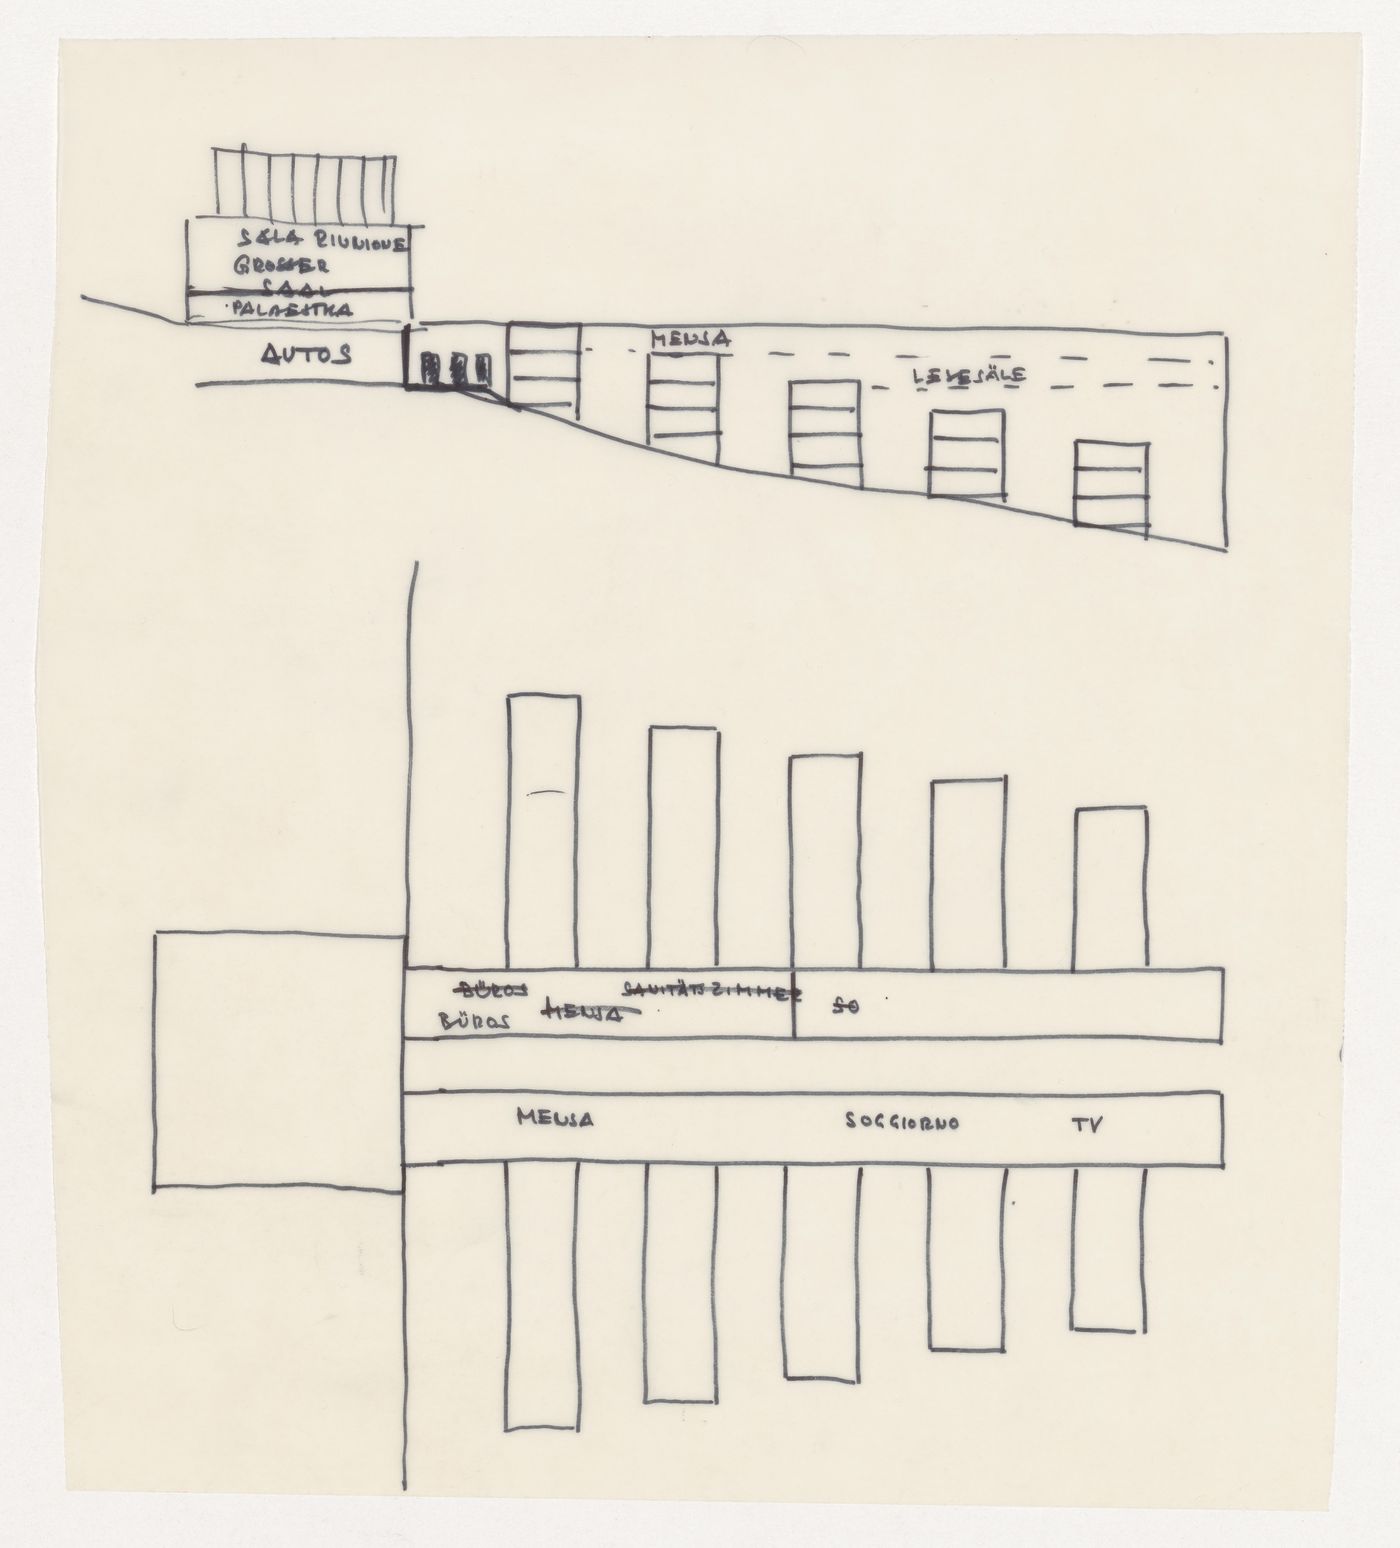 Sketch elevation and plan for Casa dello studente, Trieste, Italy